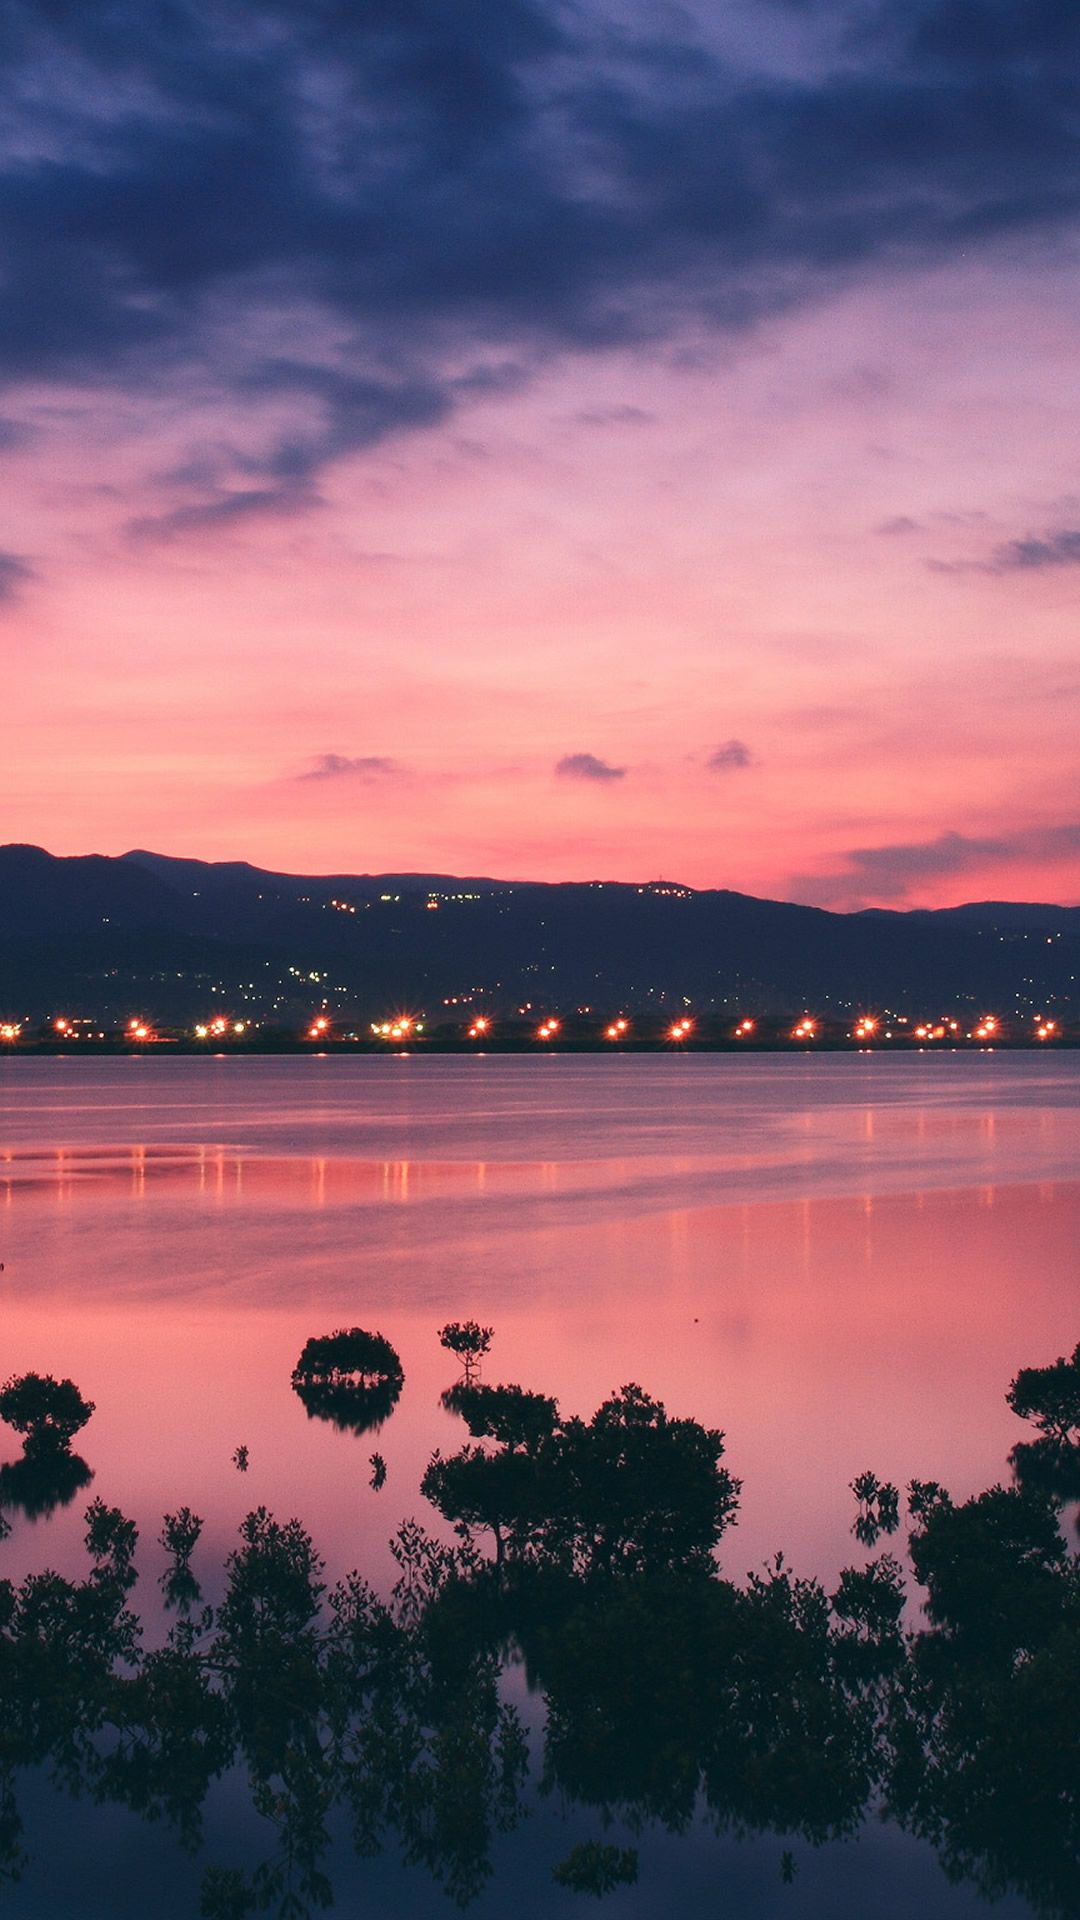 River Bank City Sunset Landscape iPhone 6 Wallpaper Download 1080x1920